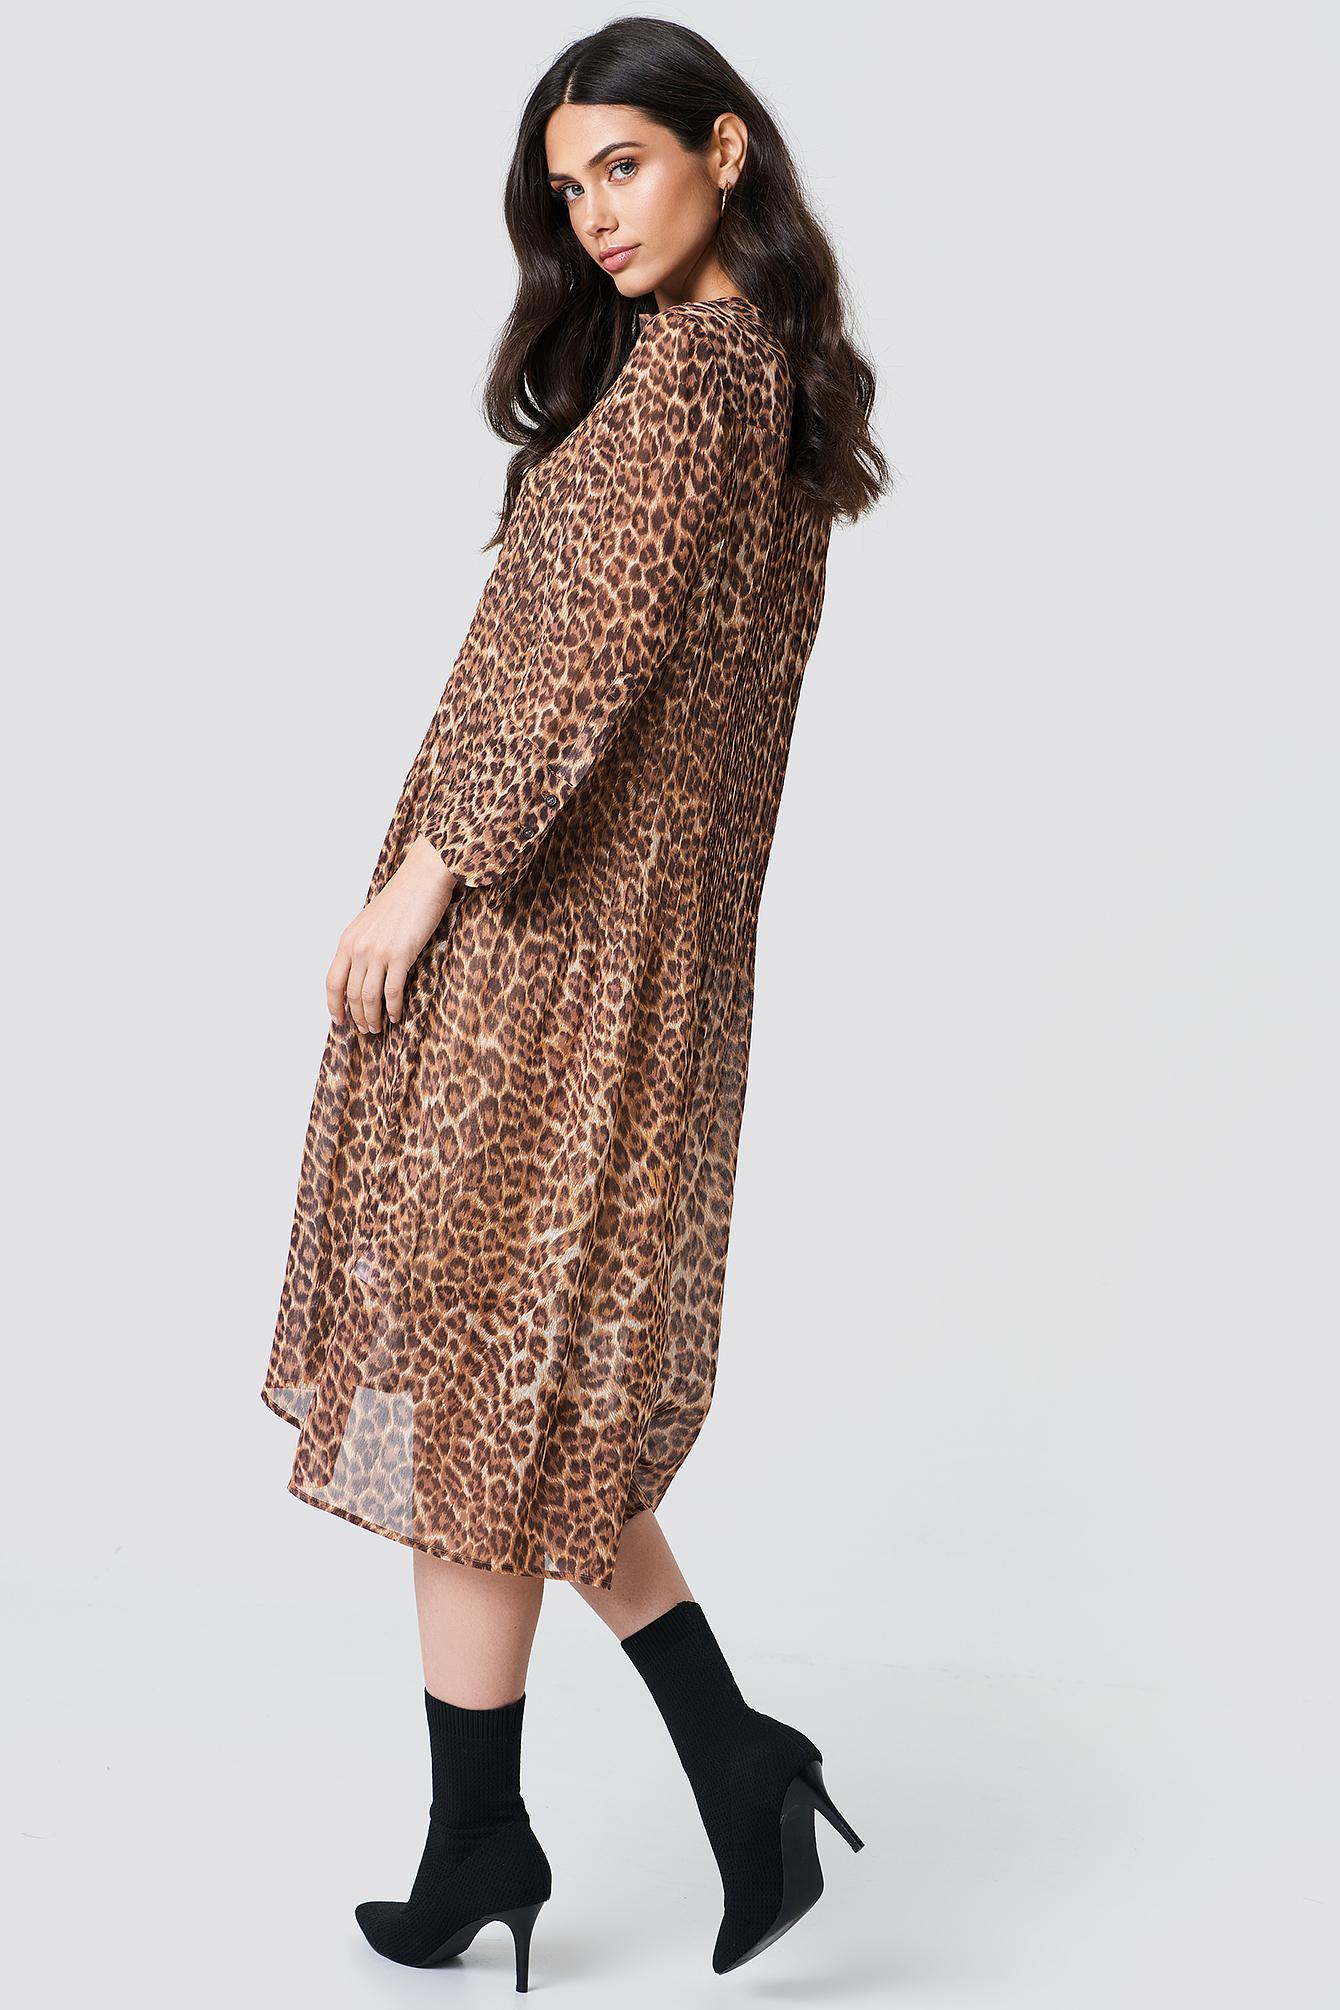 samsoe leopard dress off 61% - medpharmres.com